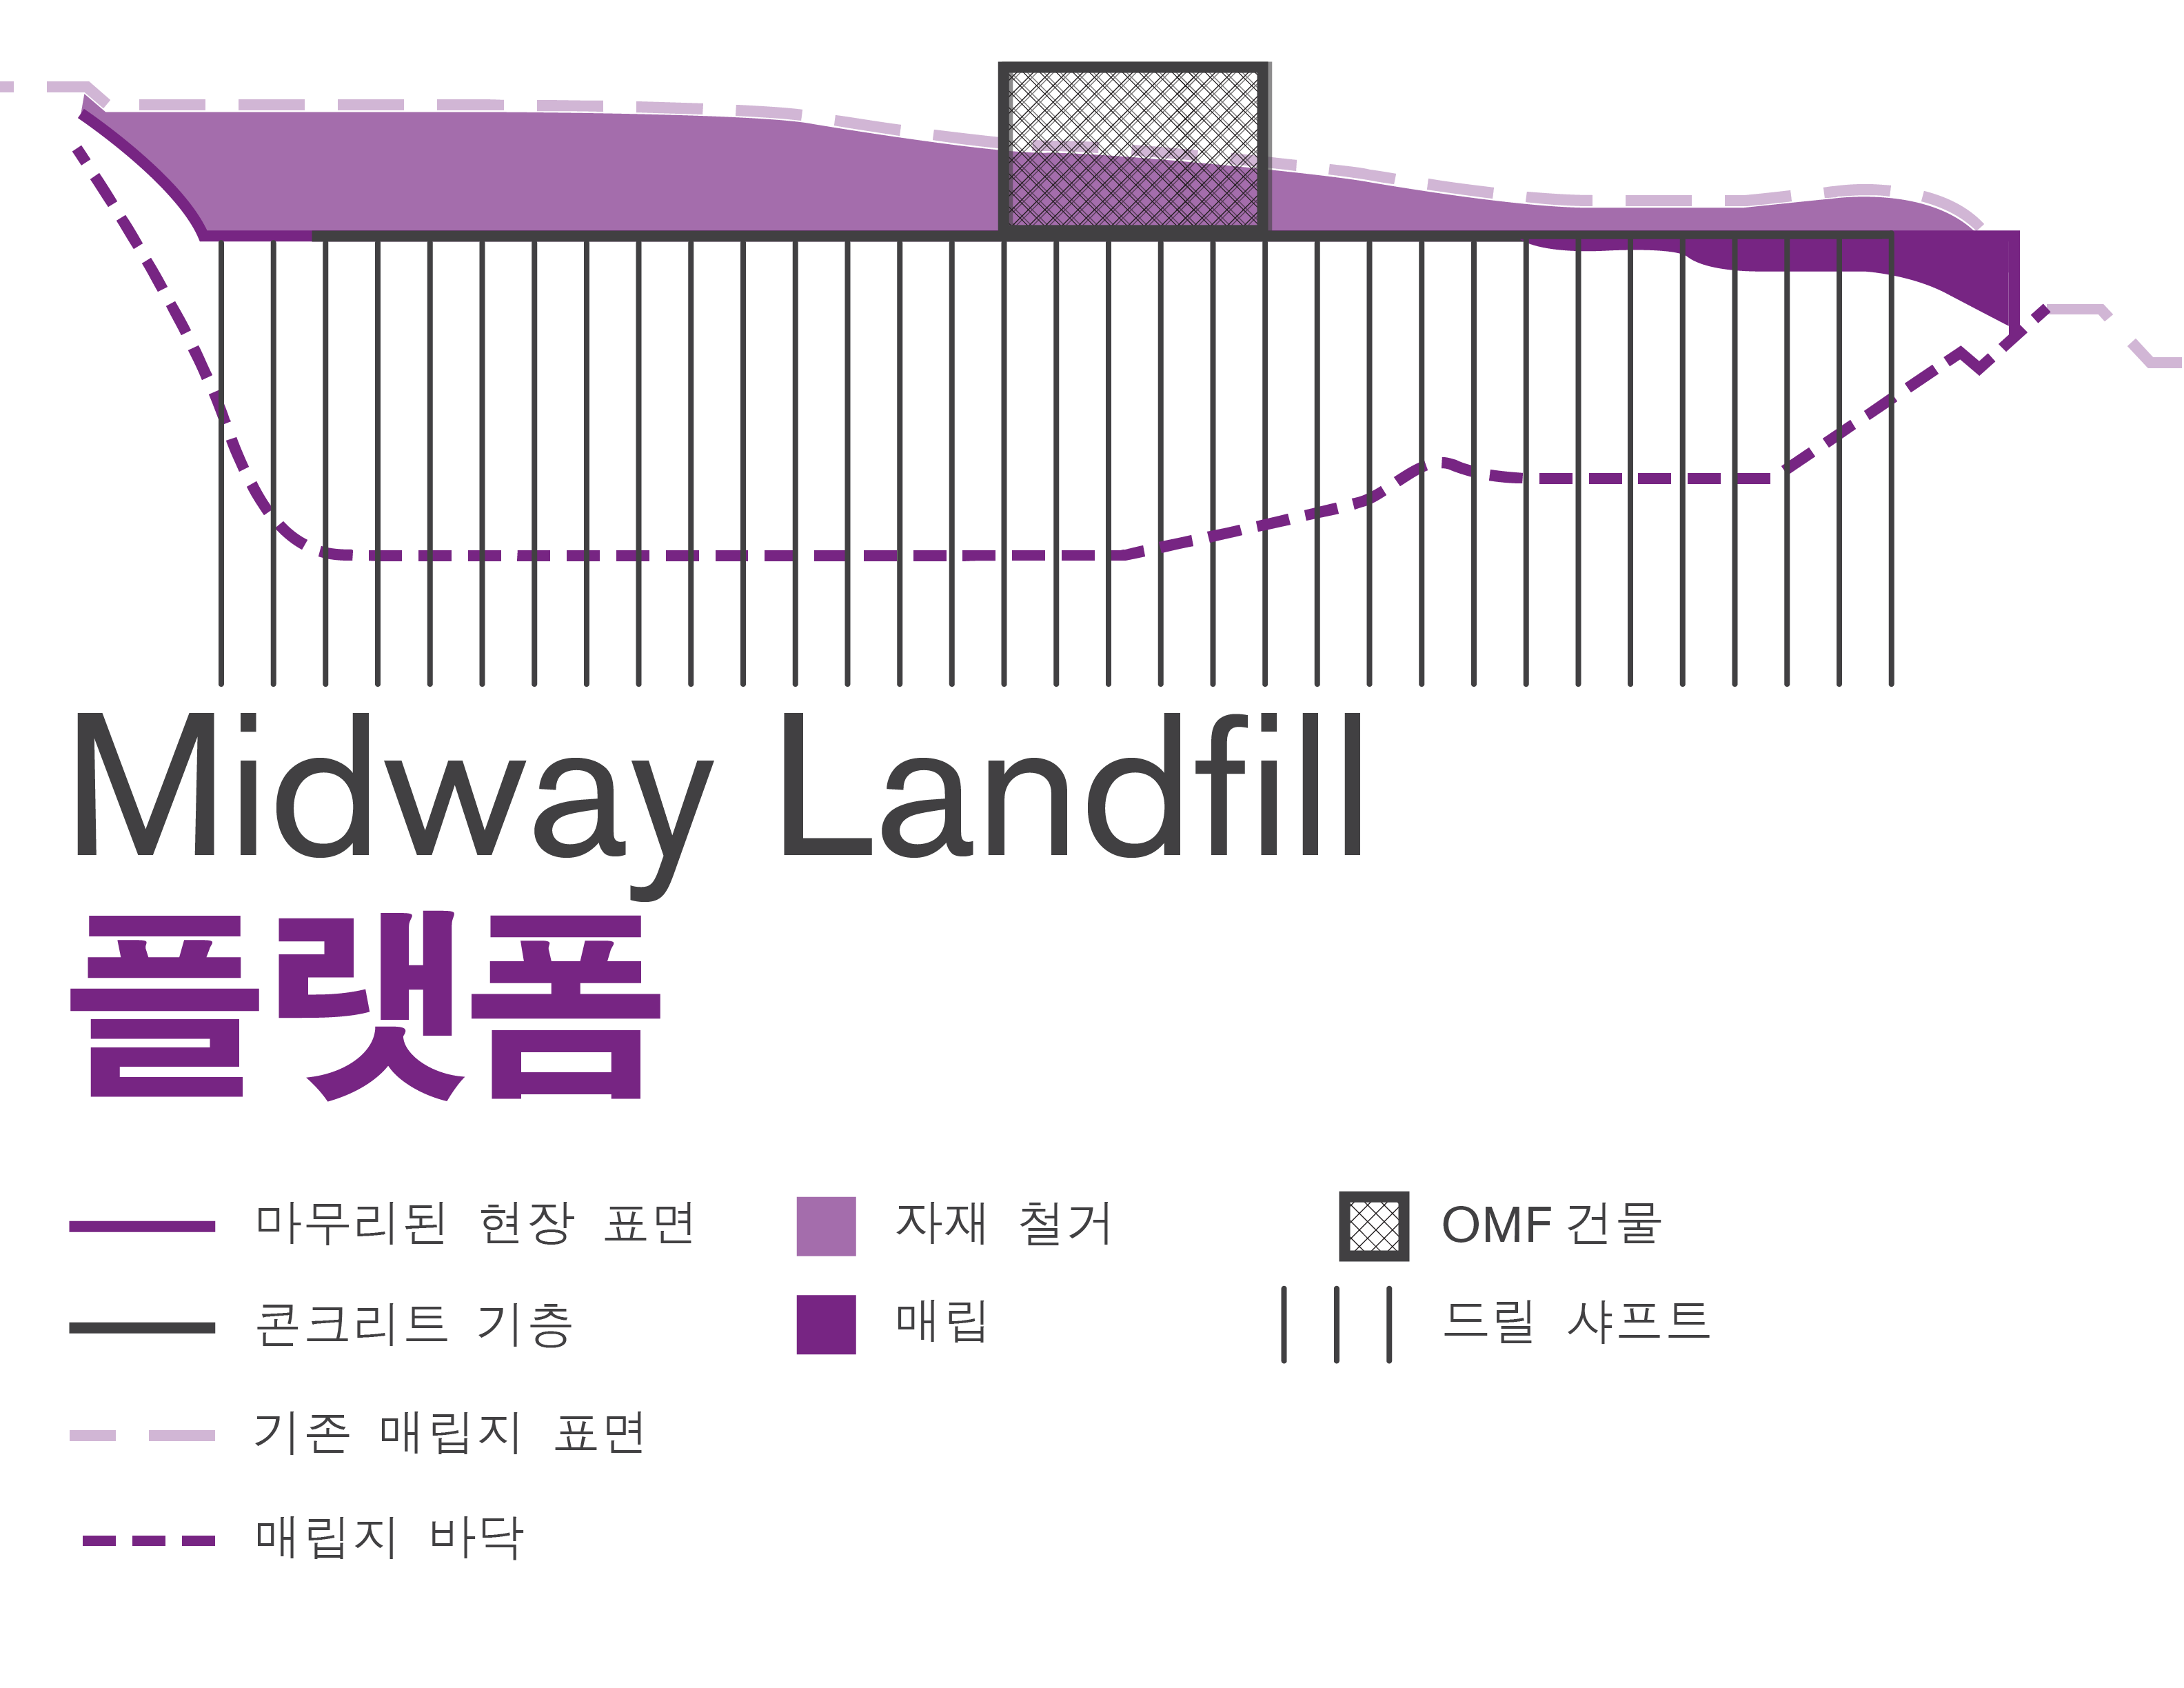 Midway Landfill 승강장 옵션을 선택하면 Sound Transit은 유해 물질을 포함한 매립 쓰레기의 표면에 최대한 가깝게 매립된 쓰레기를 부분적으로 파내야 합니다. 인부는 남부 운영 및 관리 시설 현장의 향후 사면을 만들기 위해 자재를 다시 메우게 됩니다. 향후 운영 및 관리 시설 현장은 약 700개의 콘크리트 샤프트로 지지되는 승강장 위에 자리 잡게 됩니다.